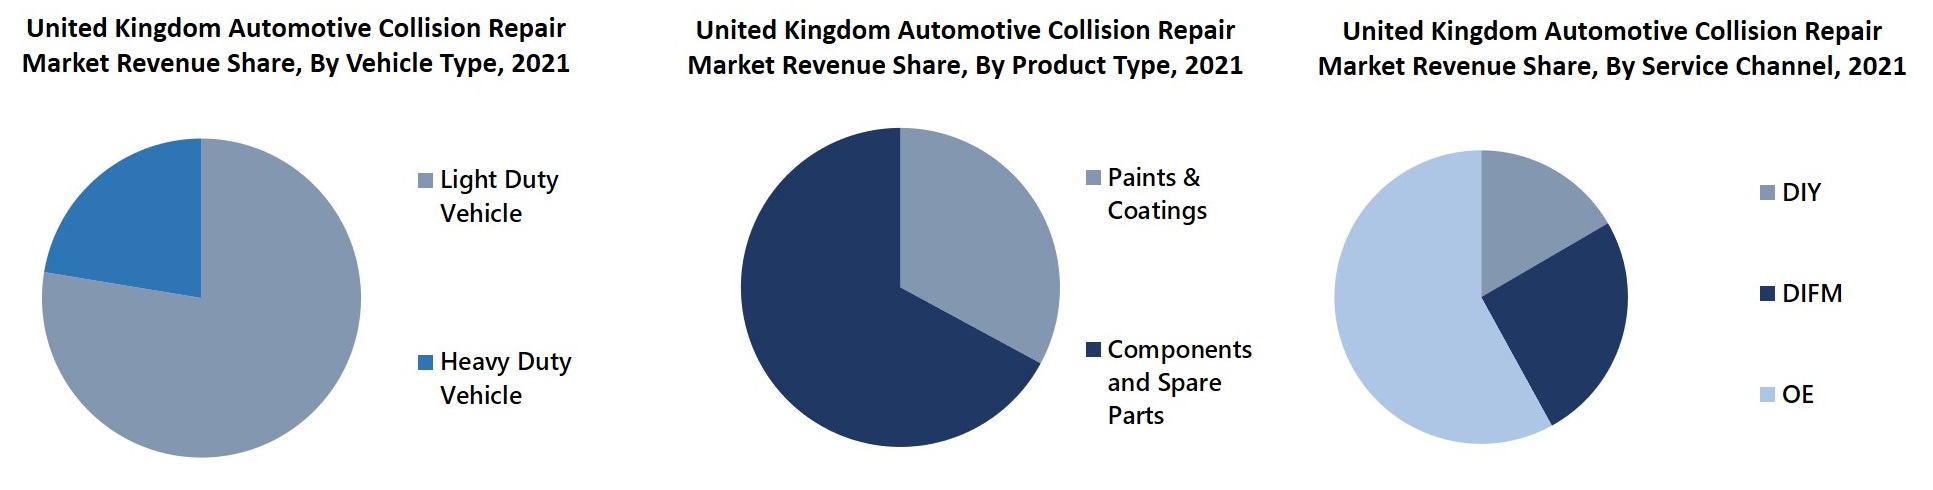 United Kingdom Automotive Collision Repair Market Revenue Share